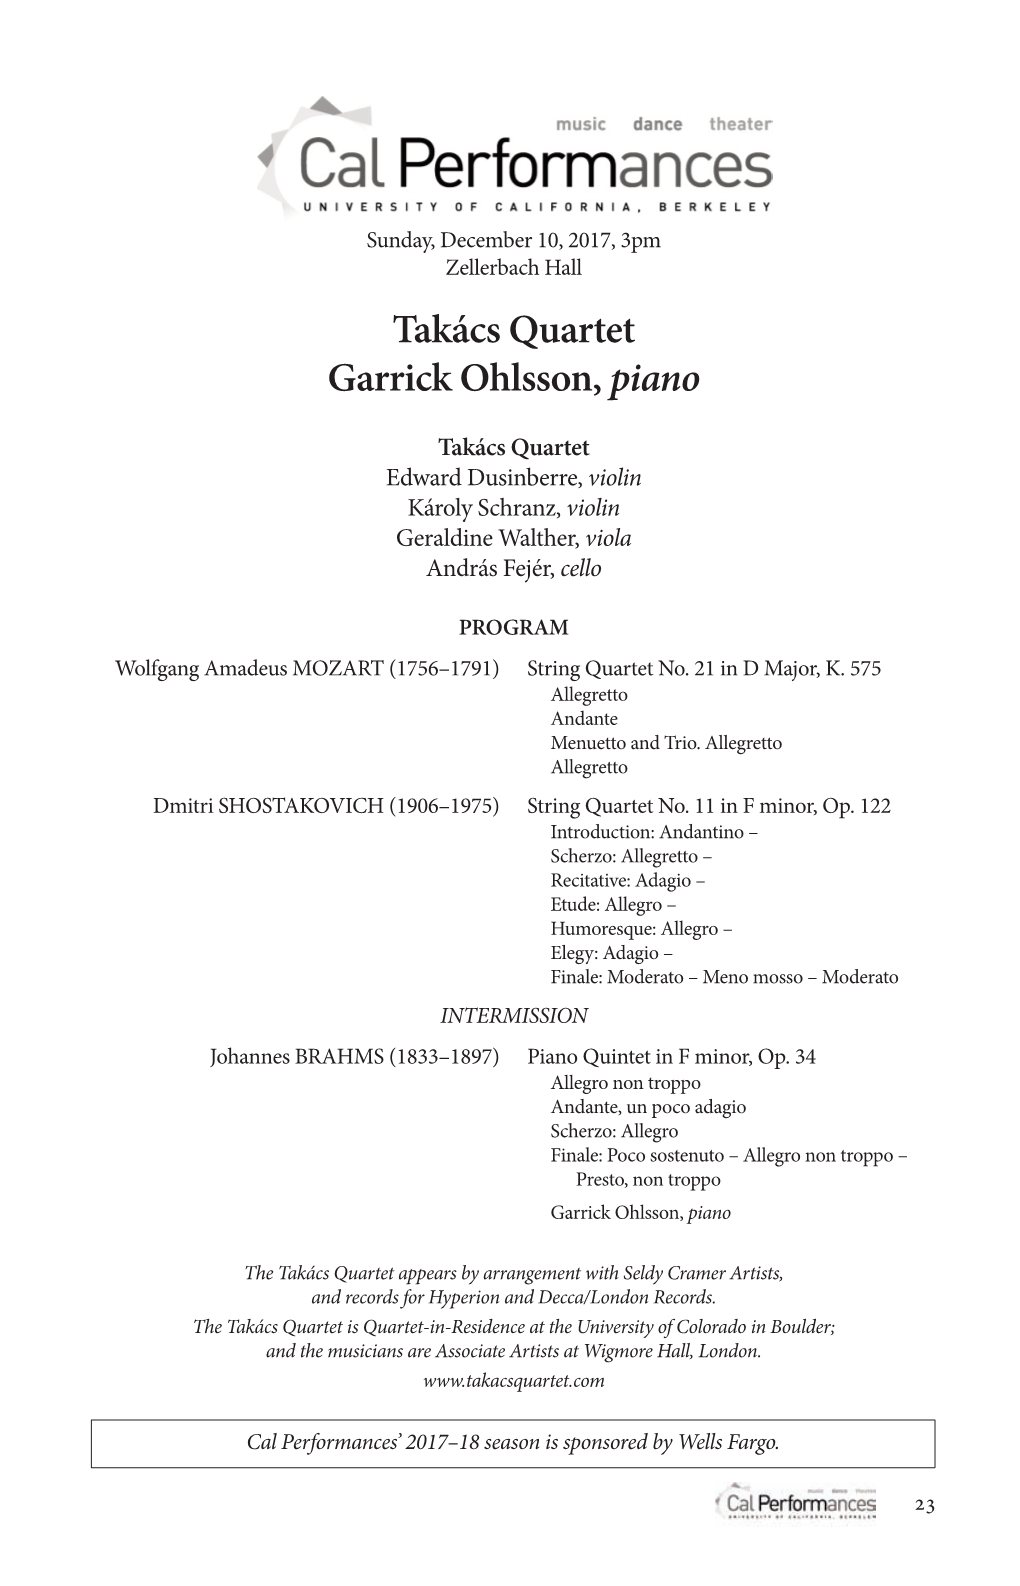 Takács Quartet Garrick Ohlsson, Piano